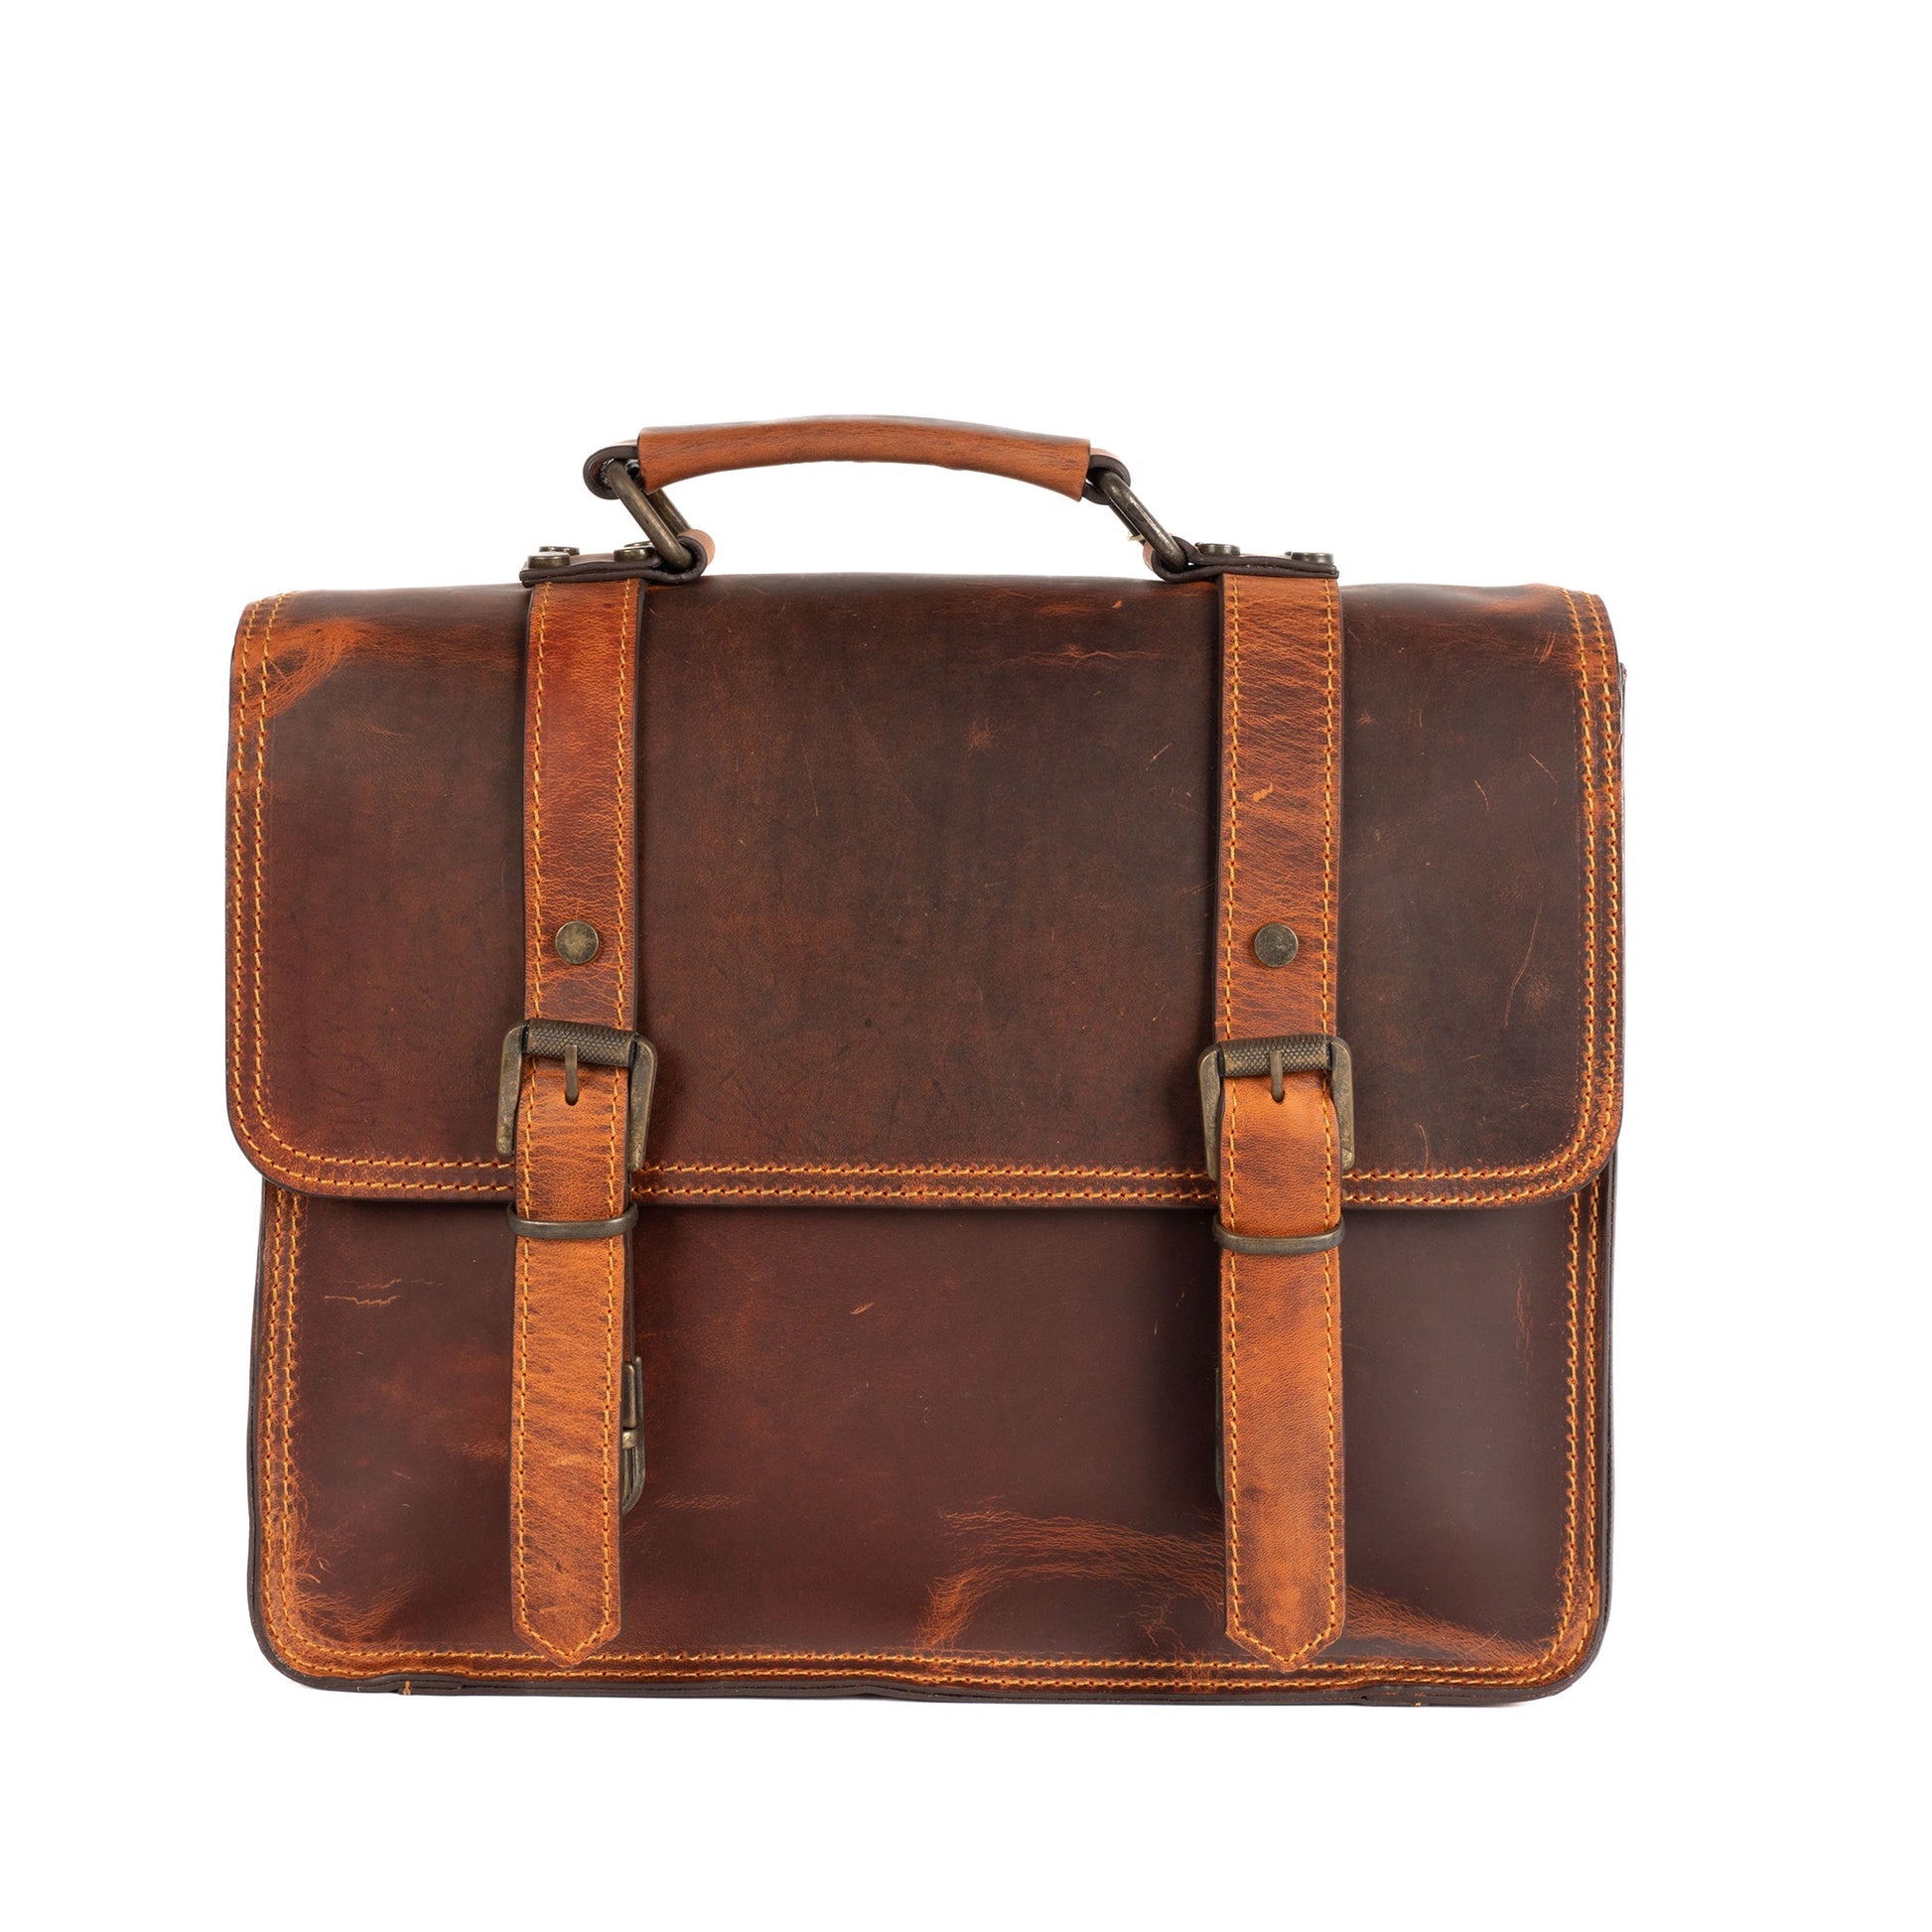 Xantus Leather Messenger Bag - Chestnut Brown - Bags Zengoda Shop online from Artisan Brands